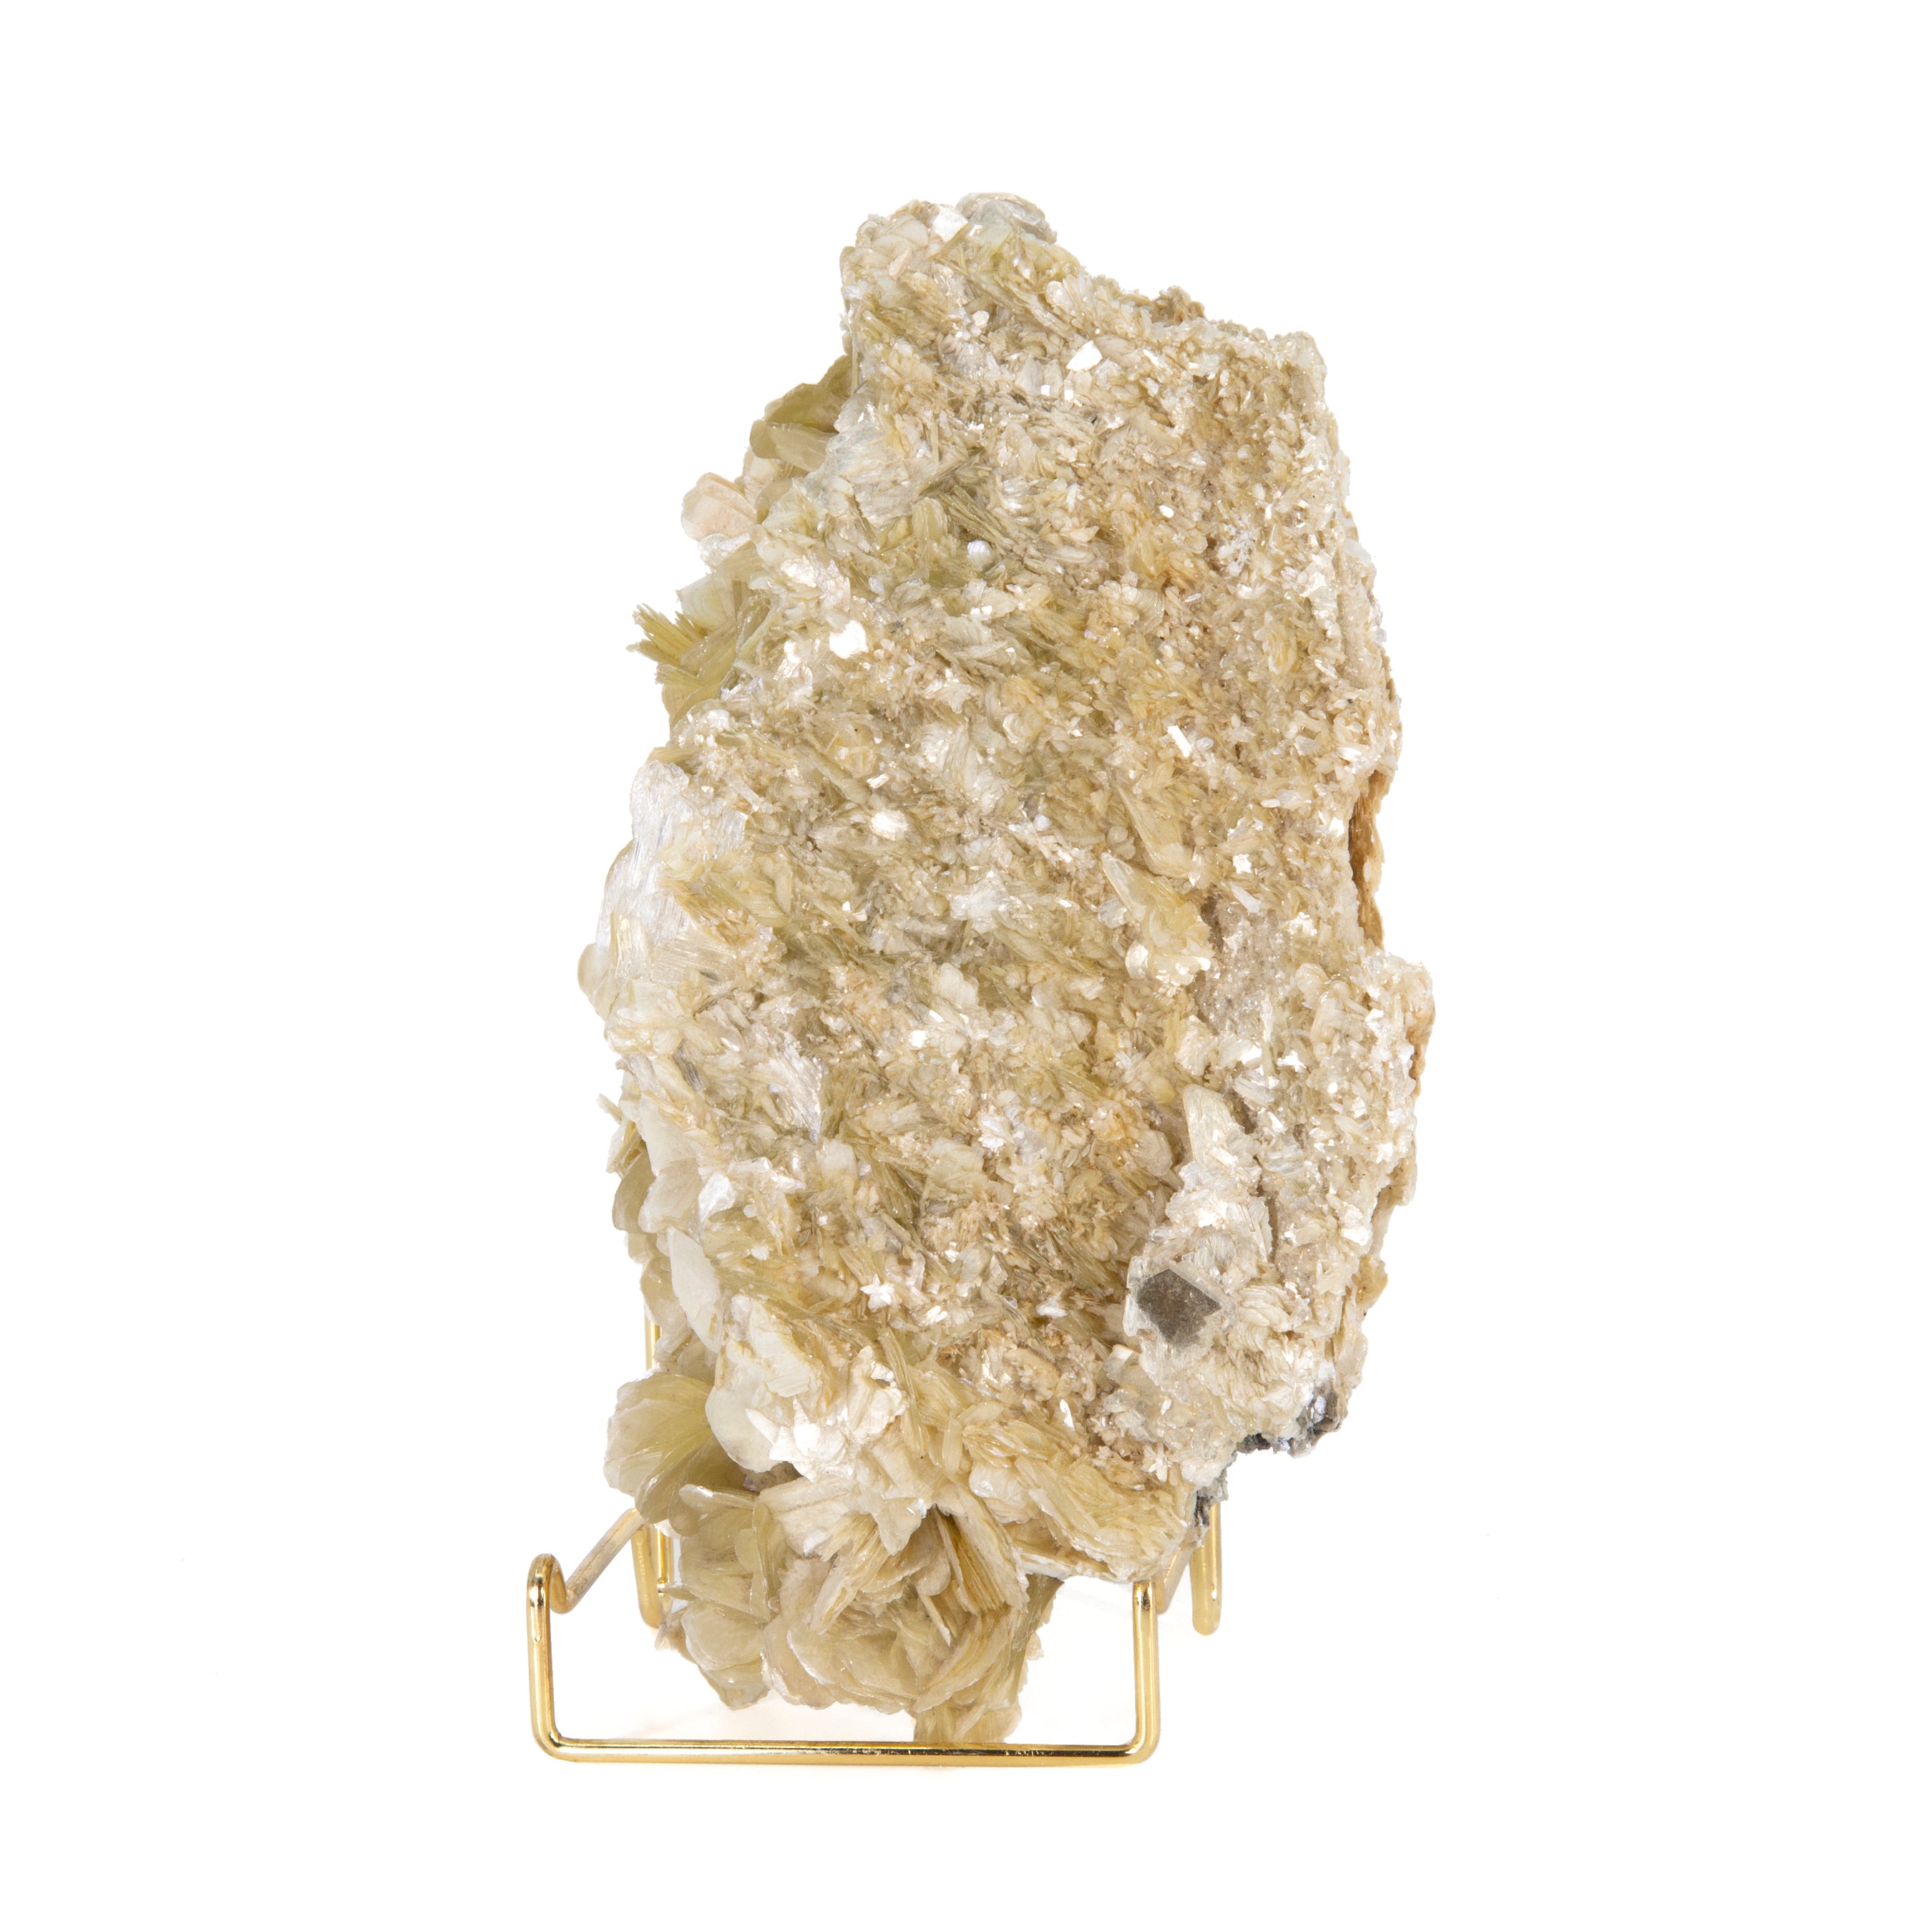 Muscovite 1.95 lb 8 inch Natural Crystal Specimen - Brazil - RX-343 - Crystalarium